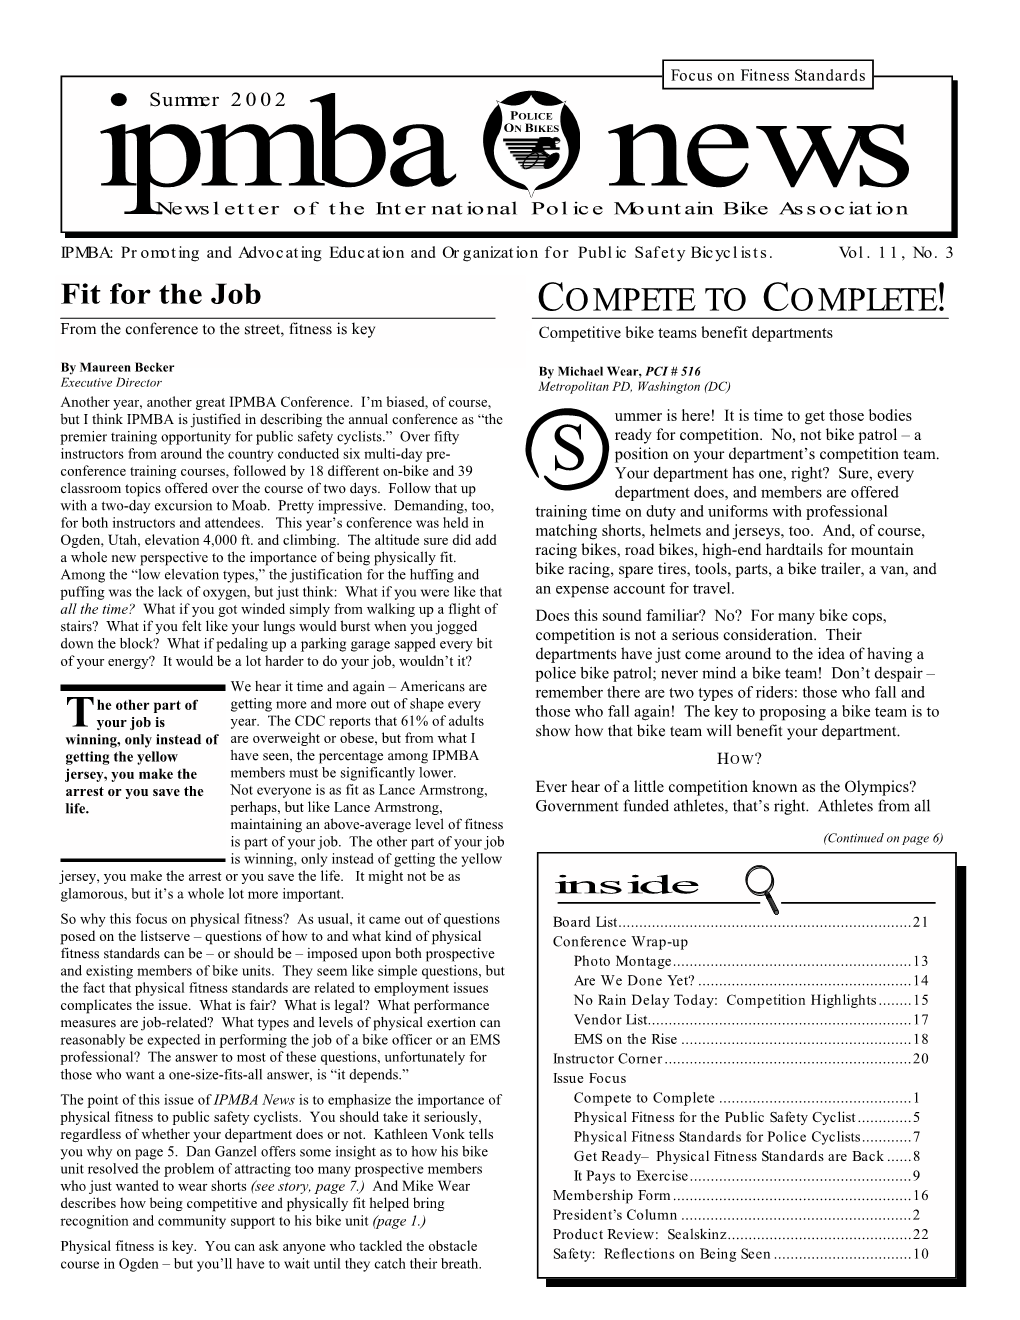 IPMBA News Vol. 11 No. 3 Summer 2002